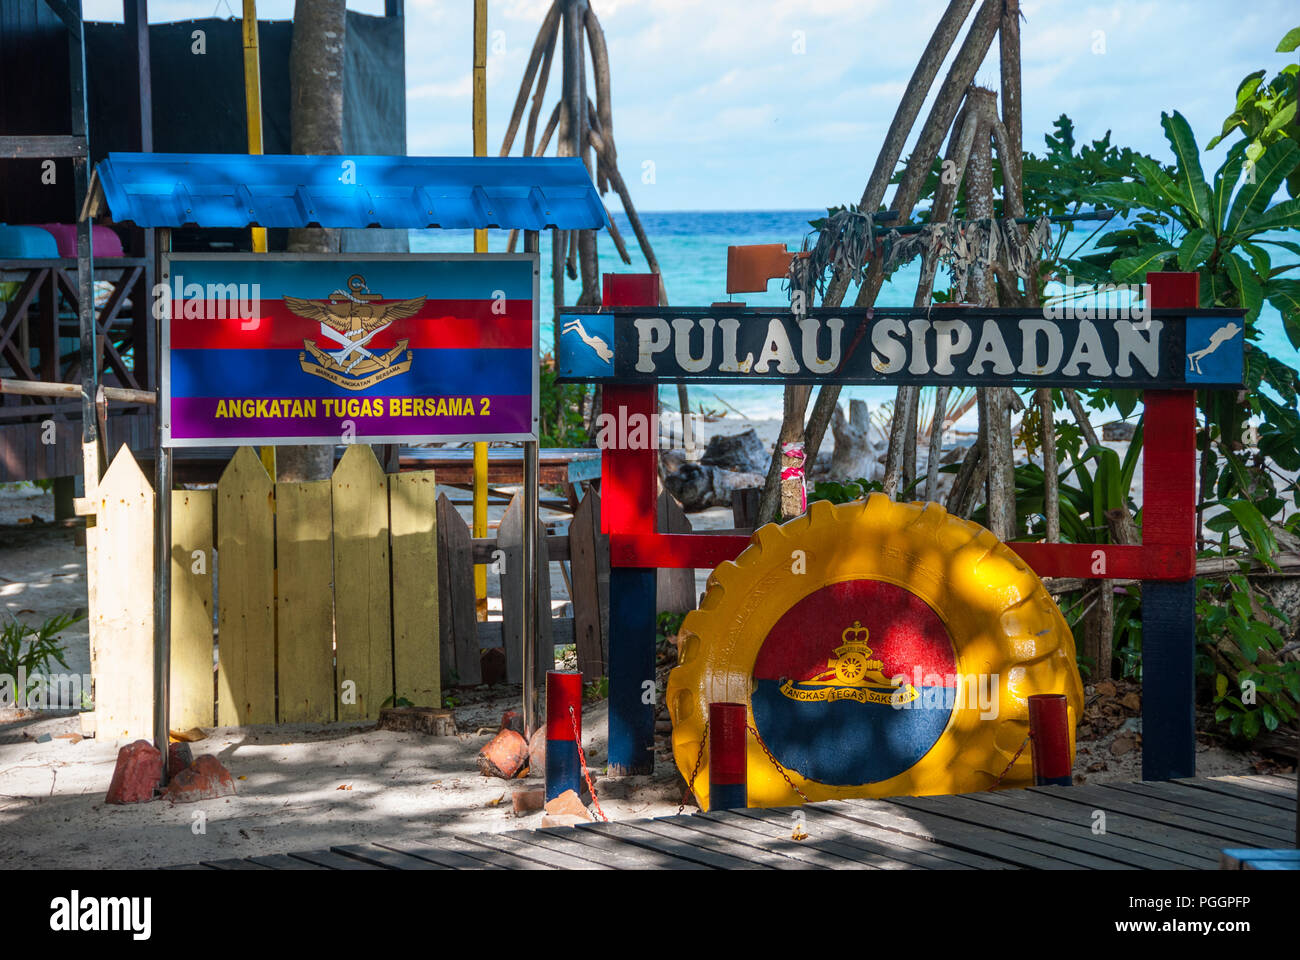 sipadan, pulau Sipadan island, information sign, Sabah, Malaysia Stock Photo